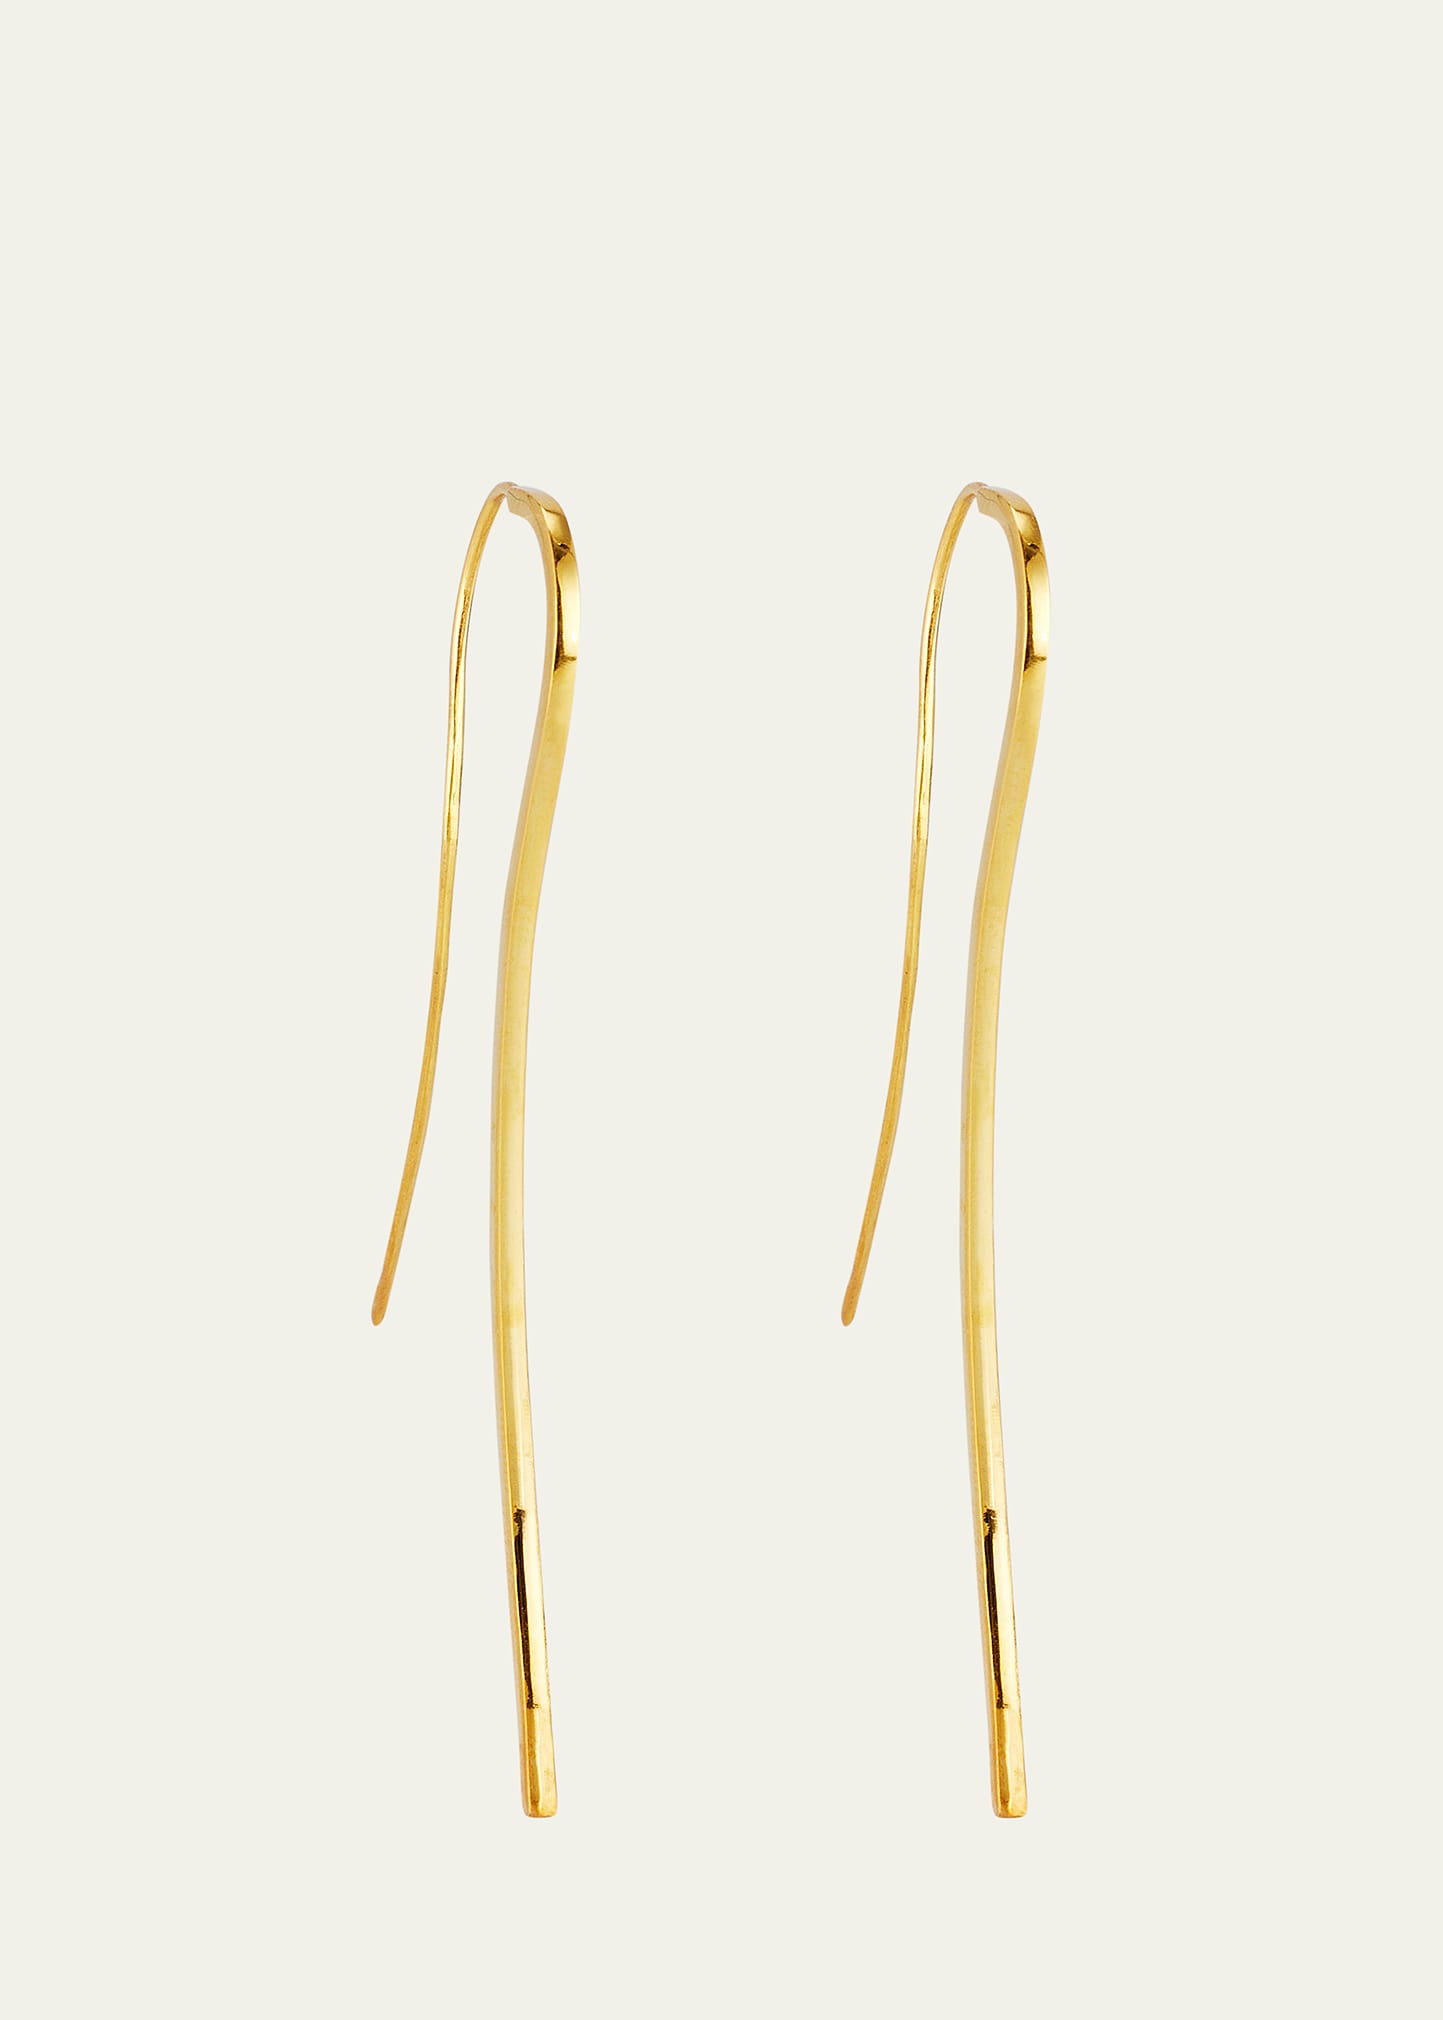 V.bellan Nikki Bar Earrings With 18k Yellow Gold Plating In 18k Vermeil Over